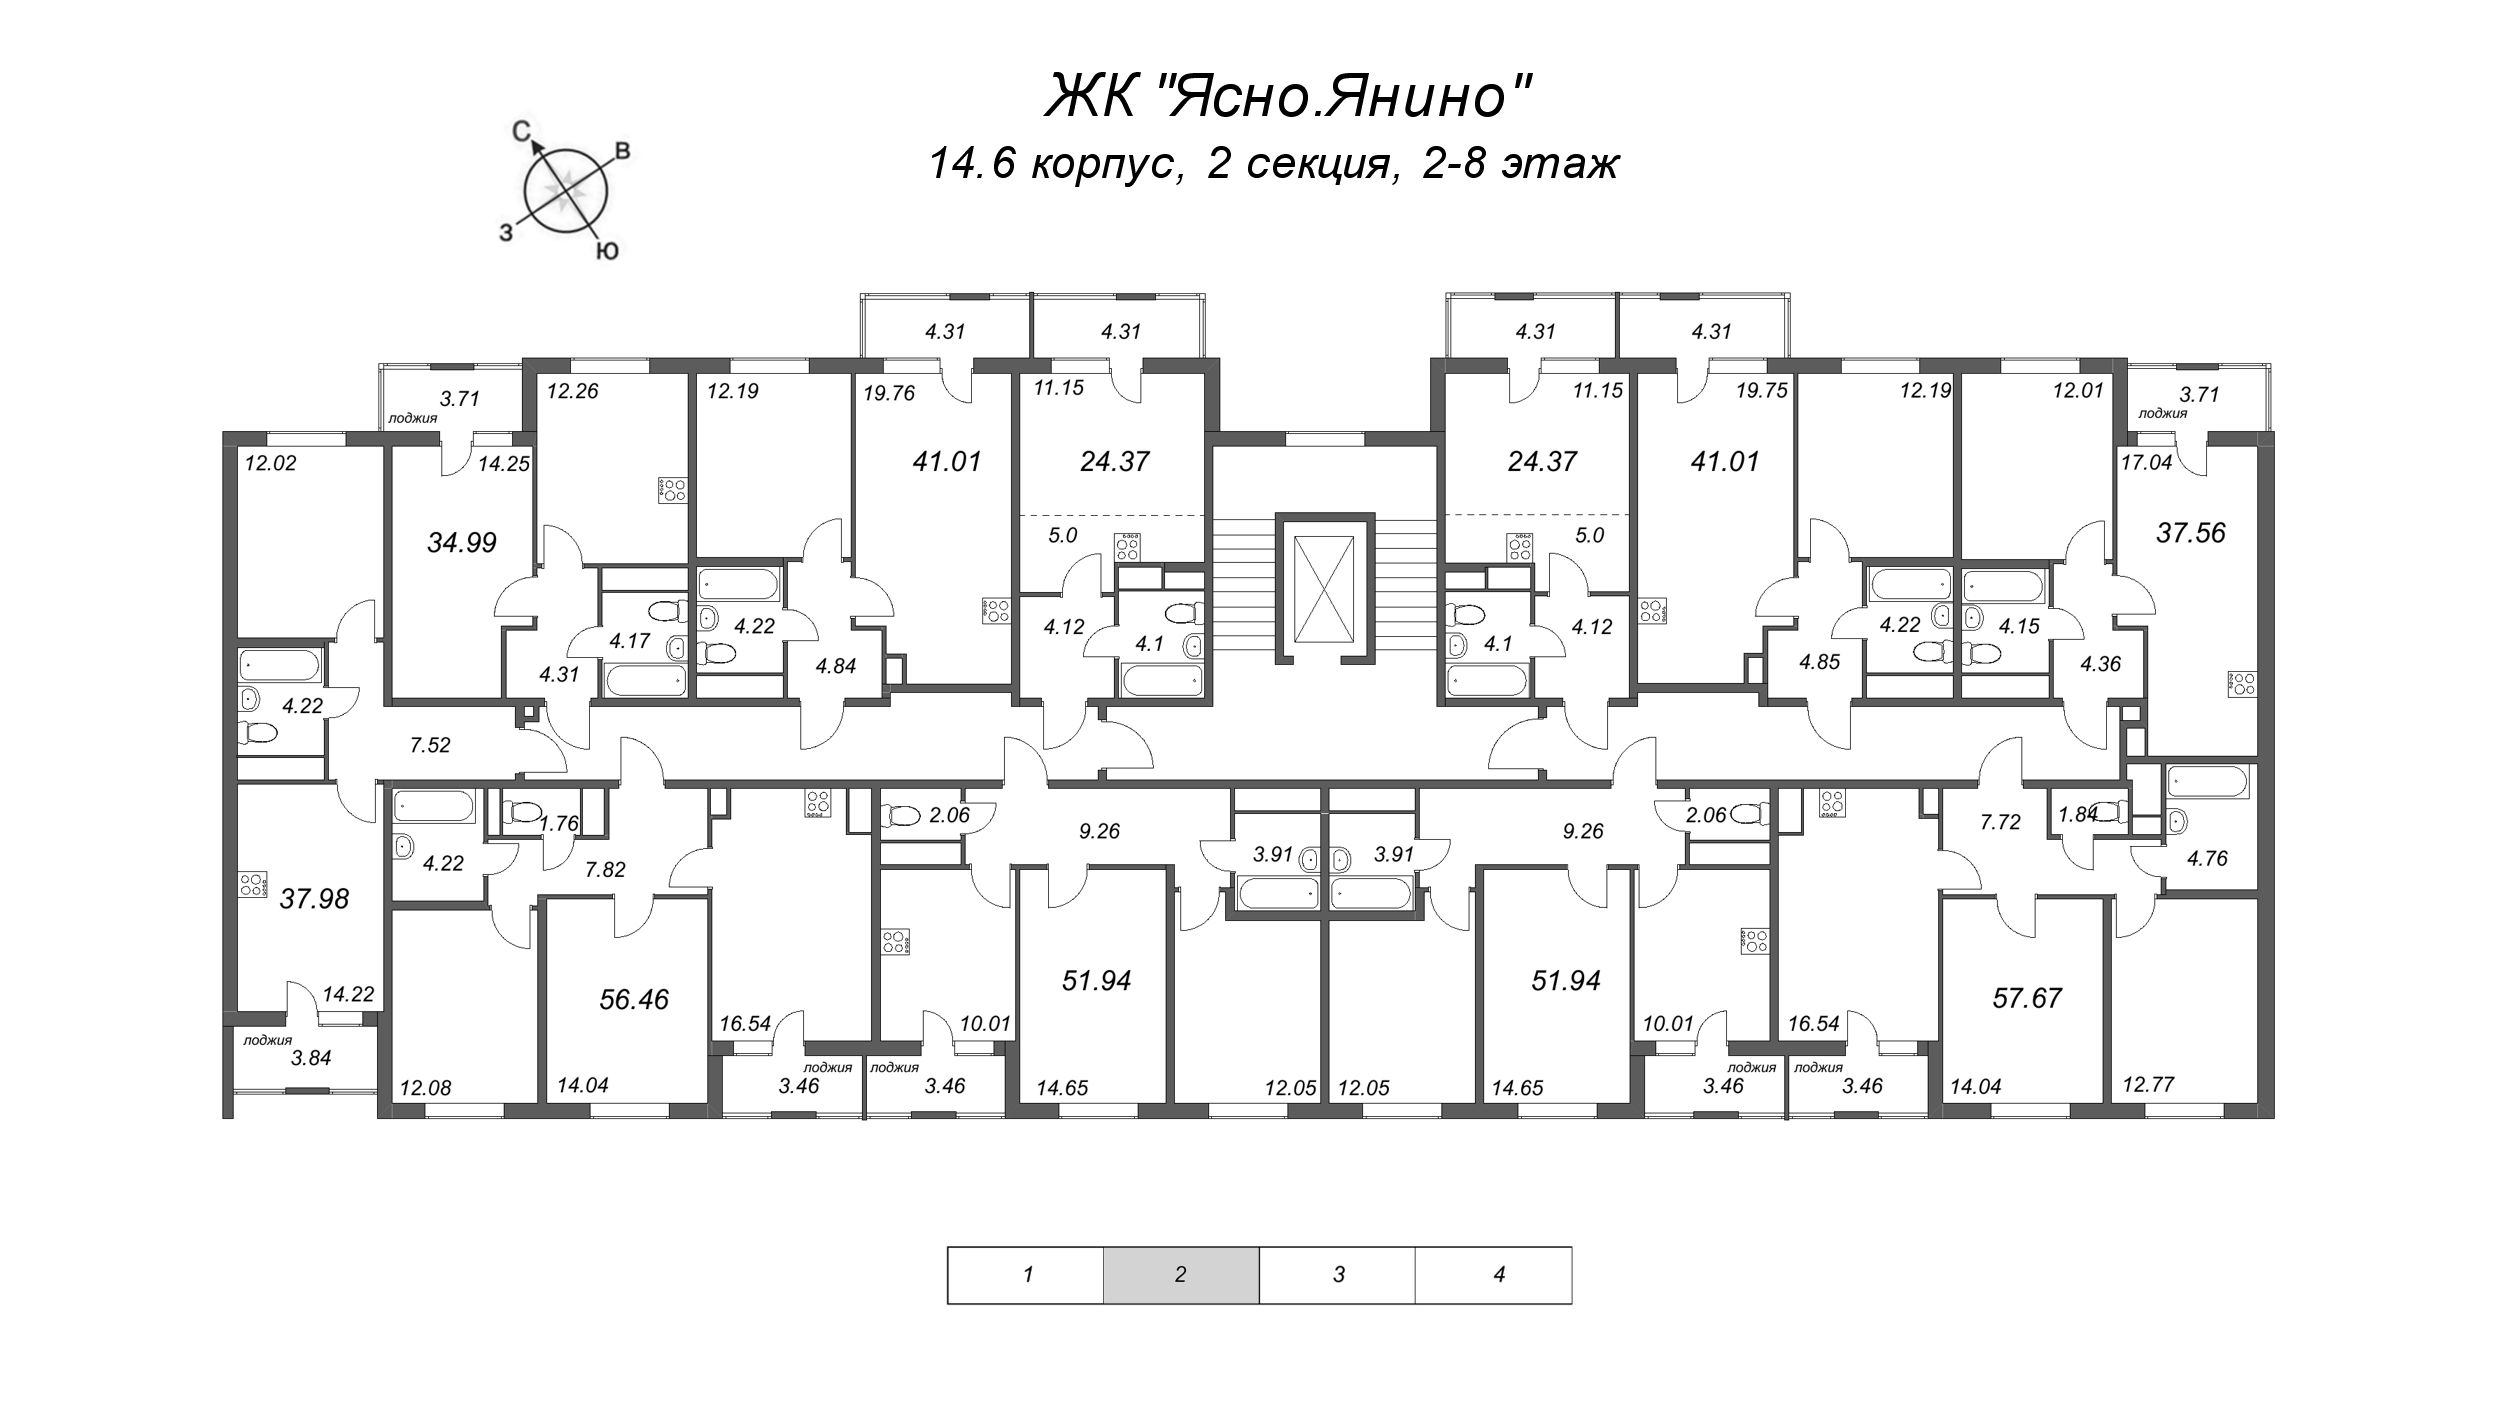 2-комнатная (Евро) квартира, 37.56 м² - планировка этажа